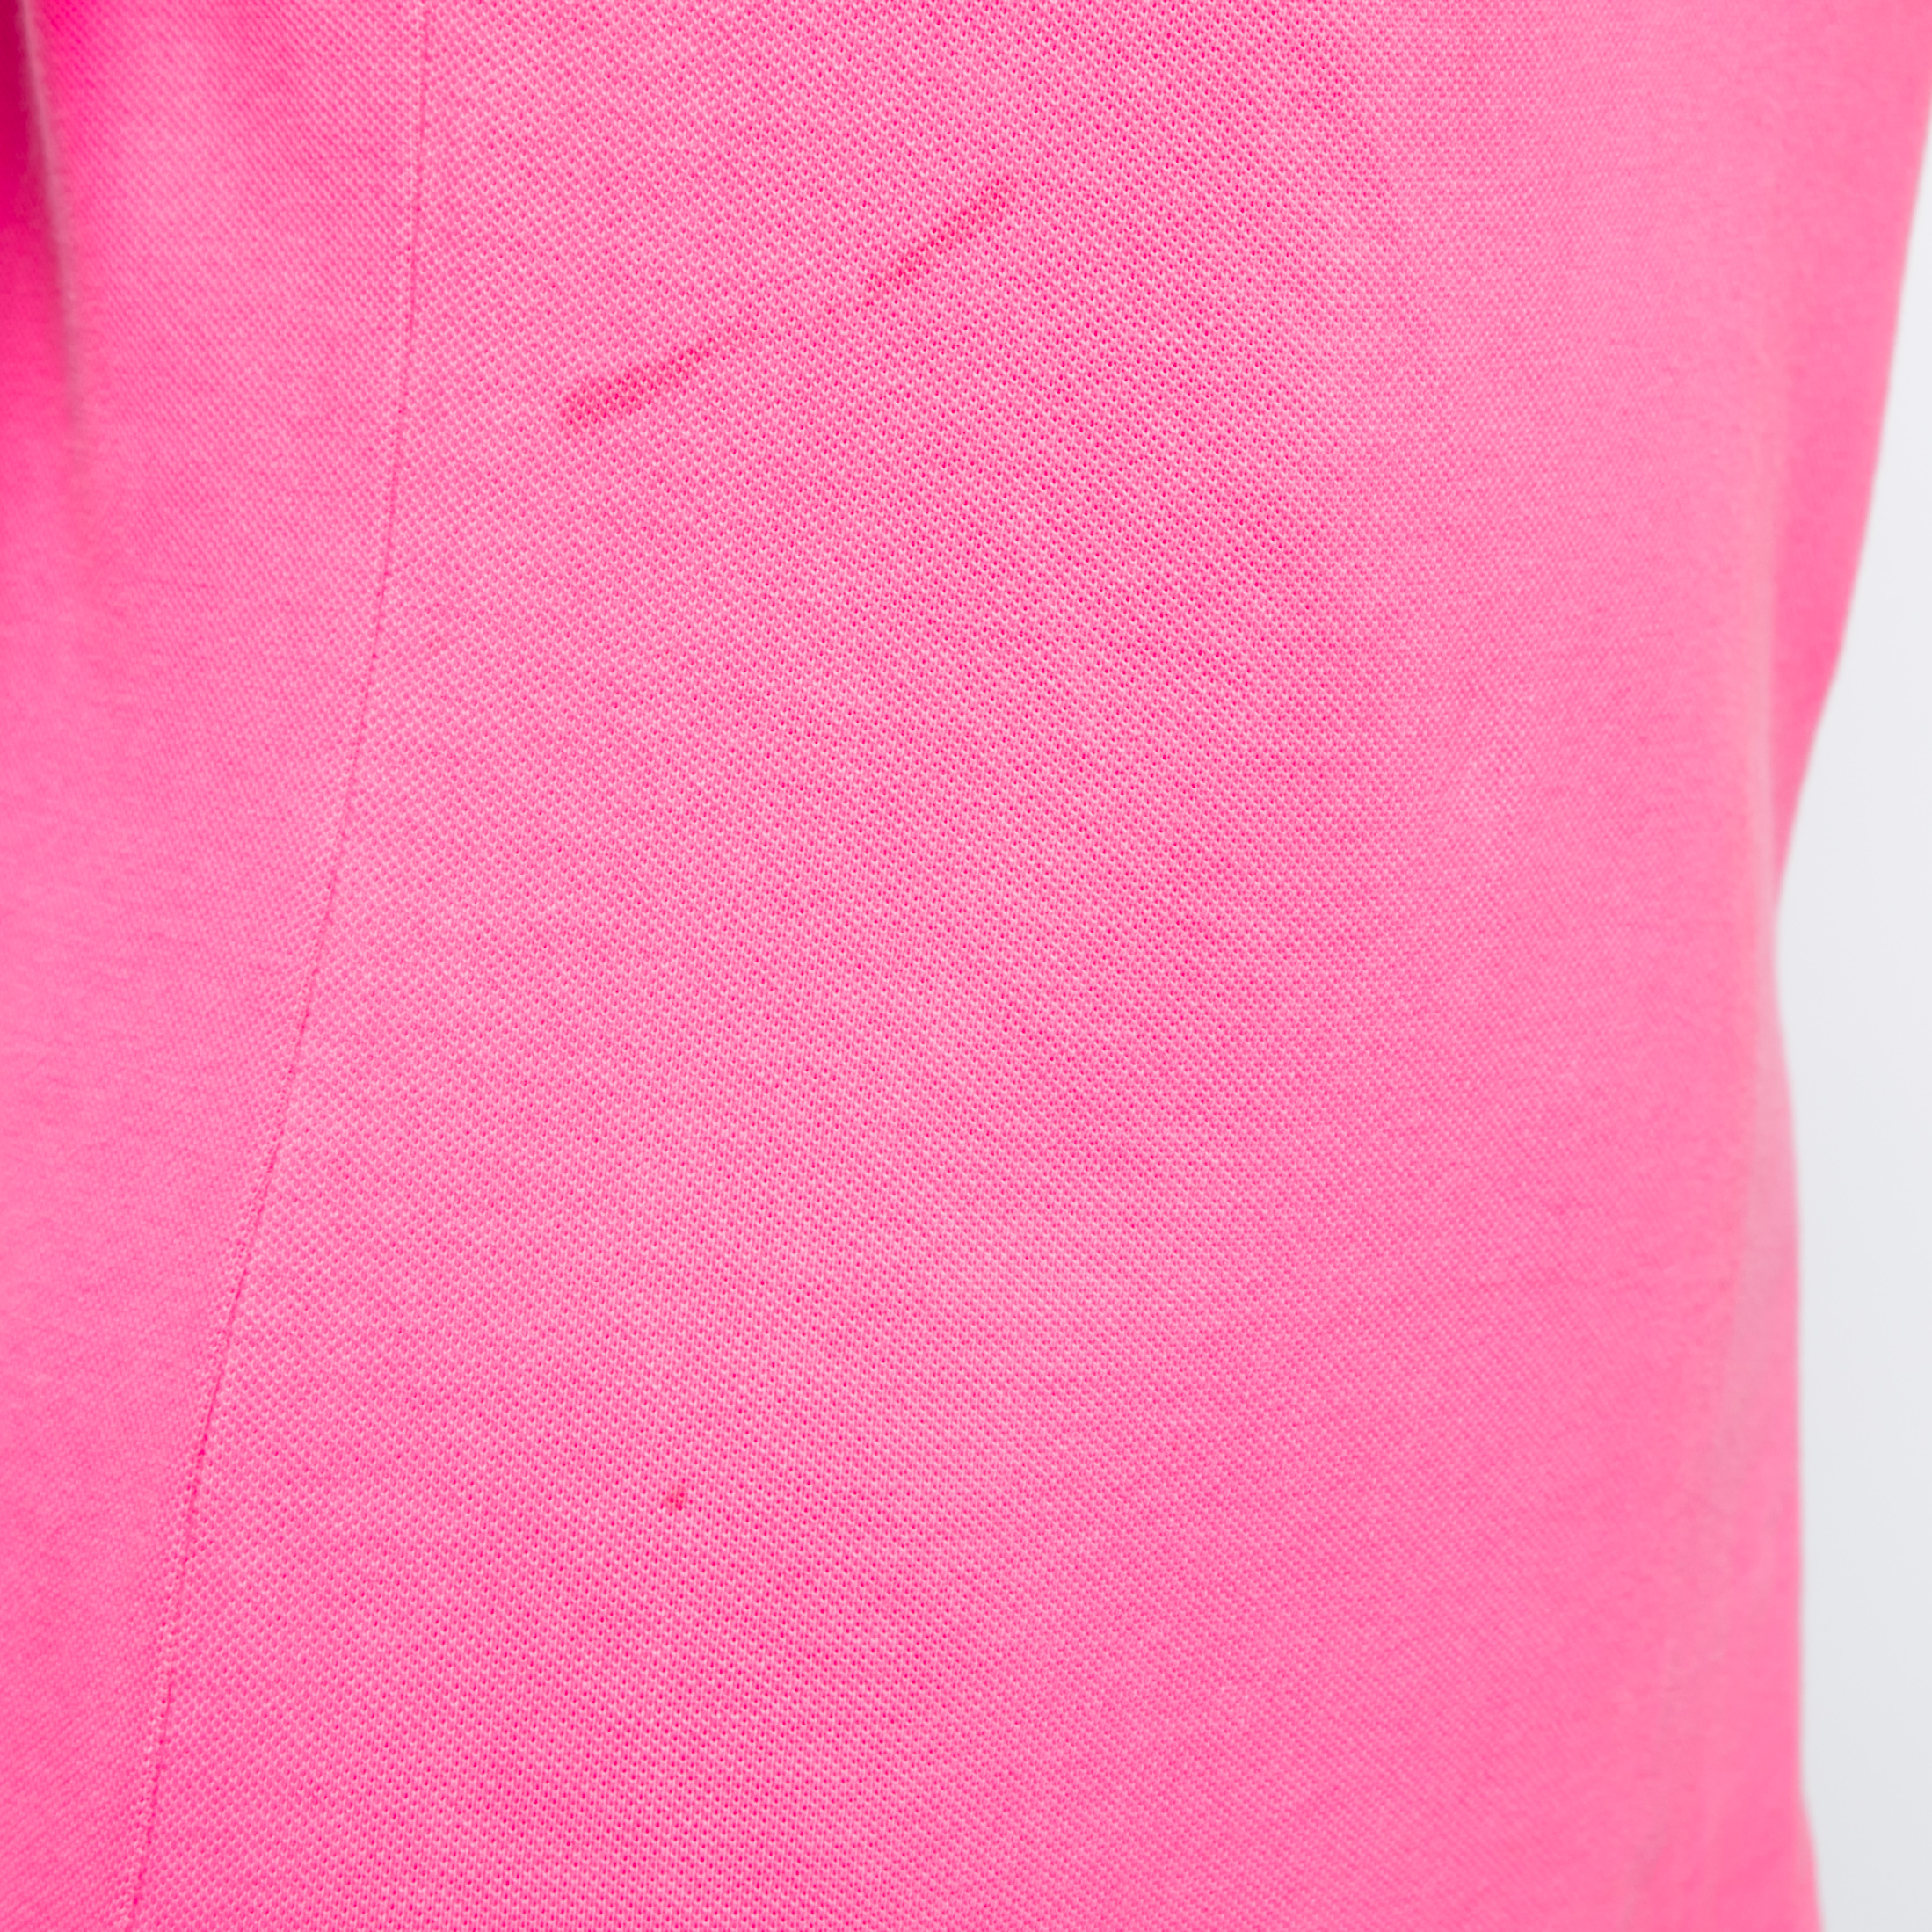 Polo Ralph Lauren Neon Pink Cotton Polo T-Shirt S